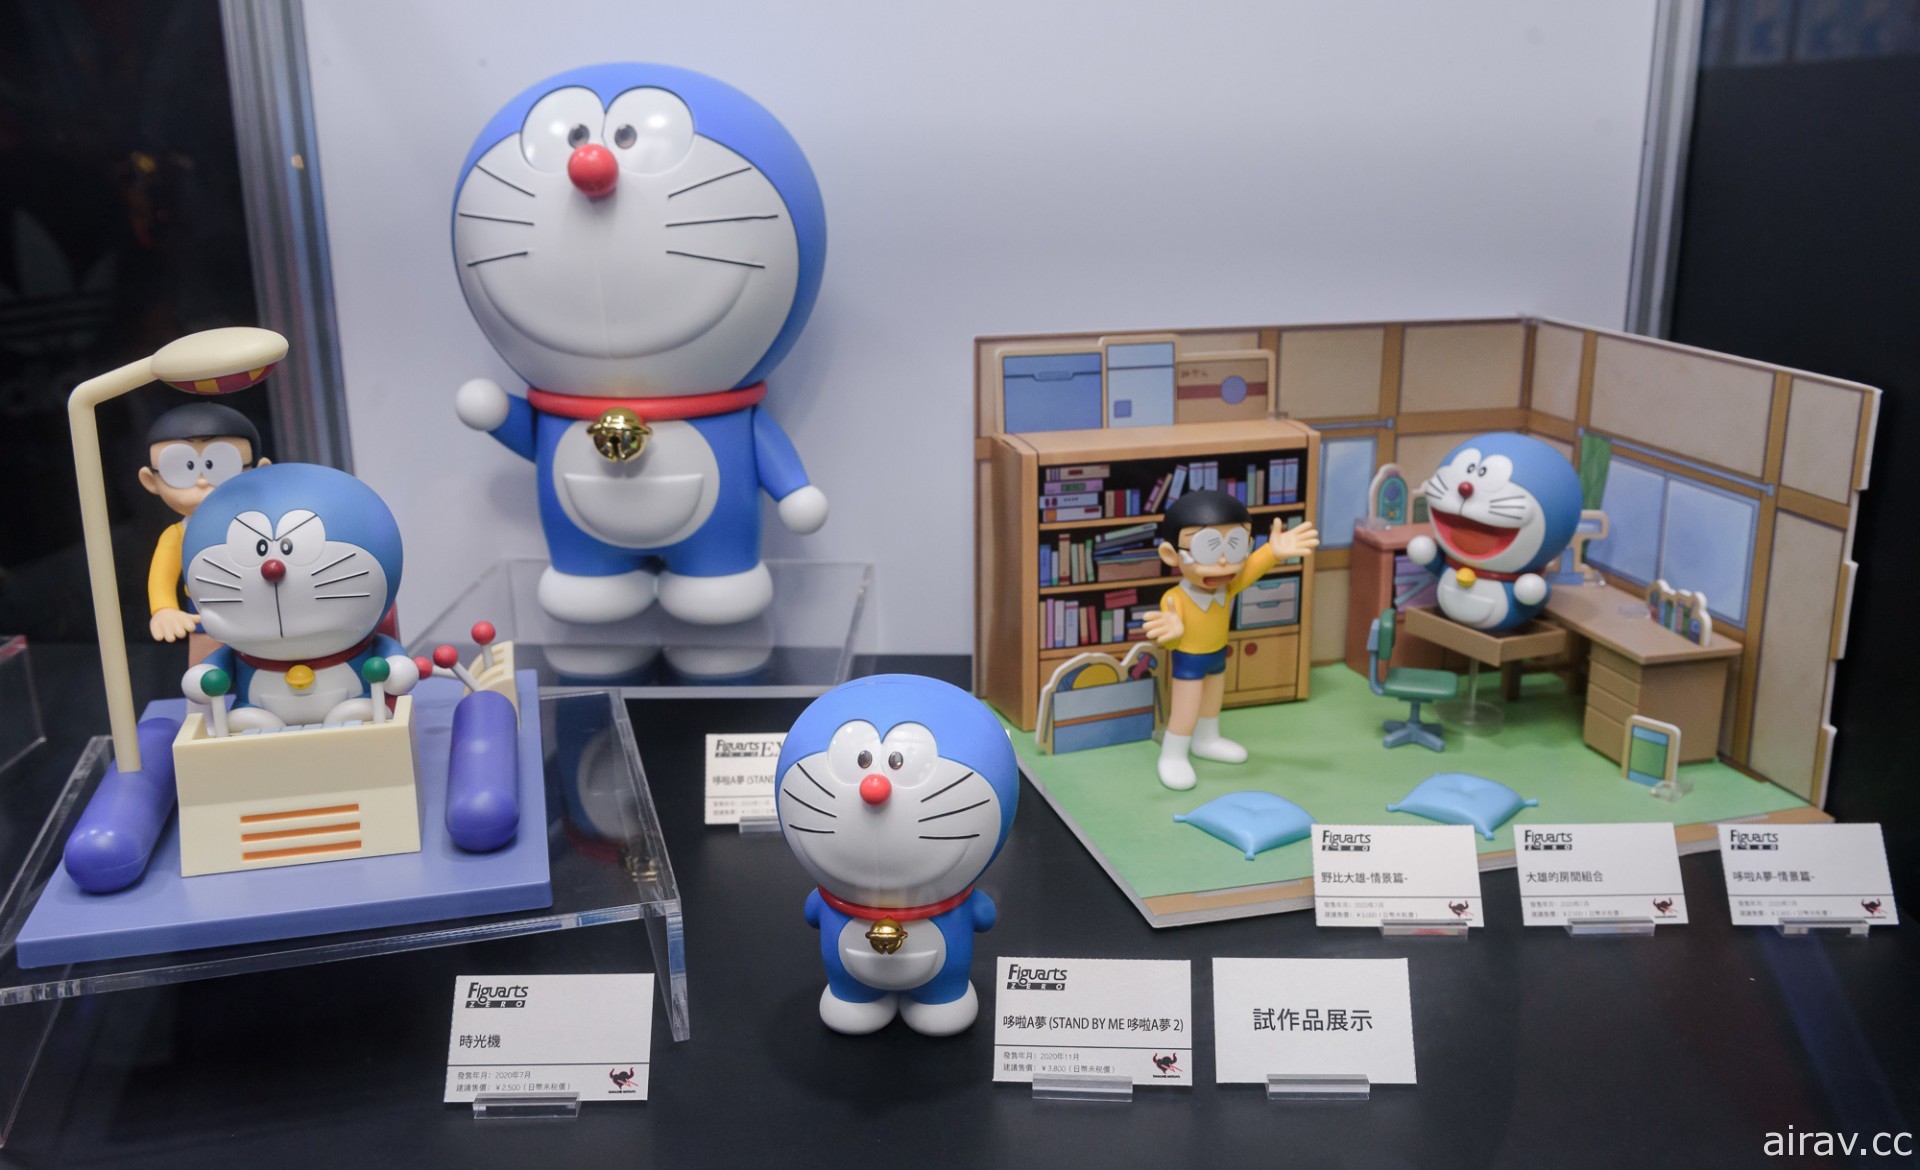 「TAMASHII POP UP SPOT 收藏玩具限定快閃展示」今起於台北地下街登場